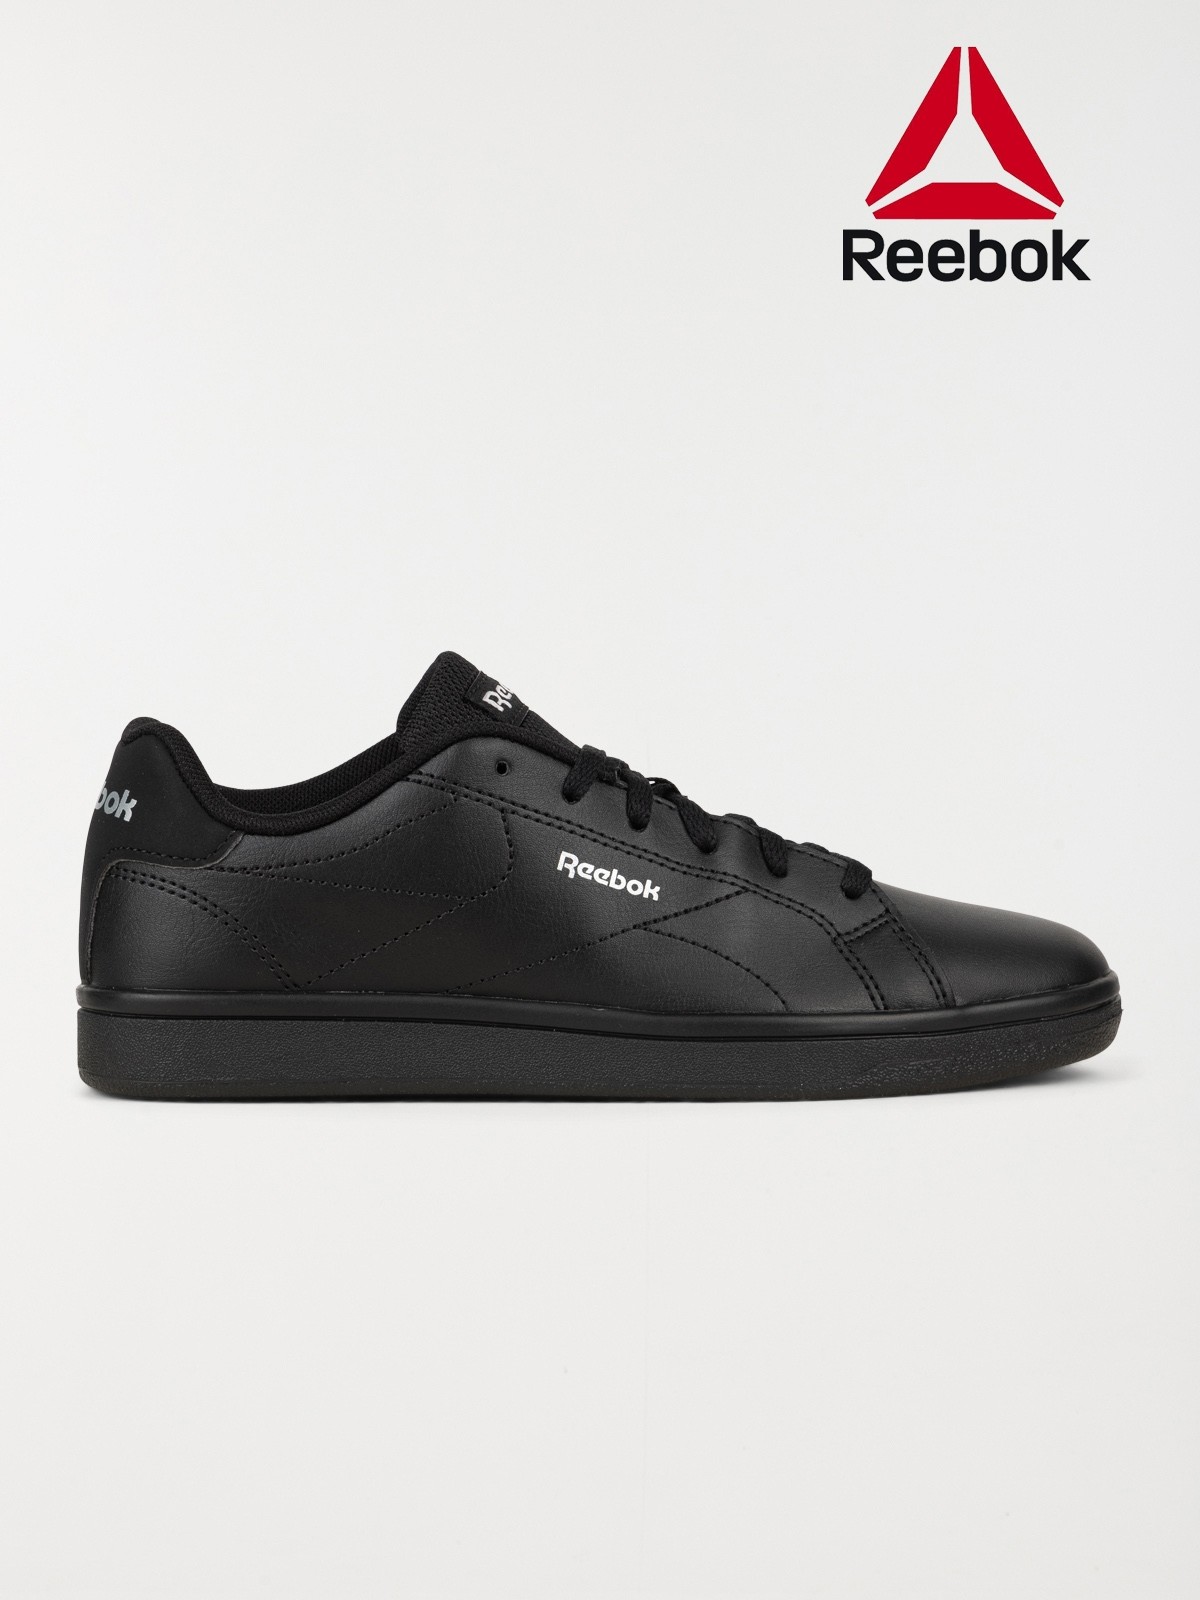 Chaussures sport femme Reebok (36-41) - DistriCenter